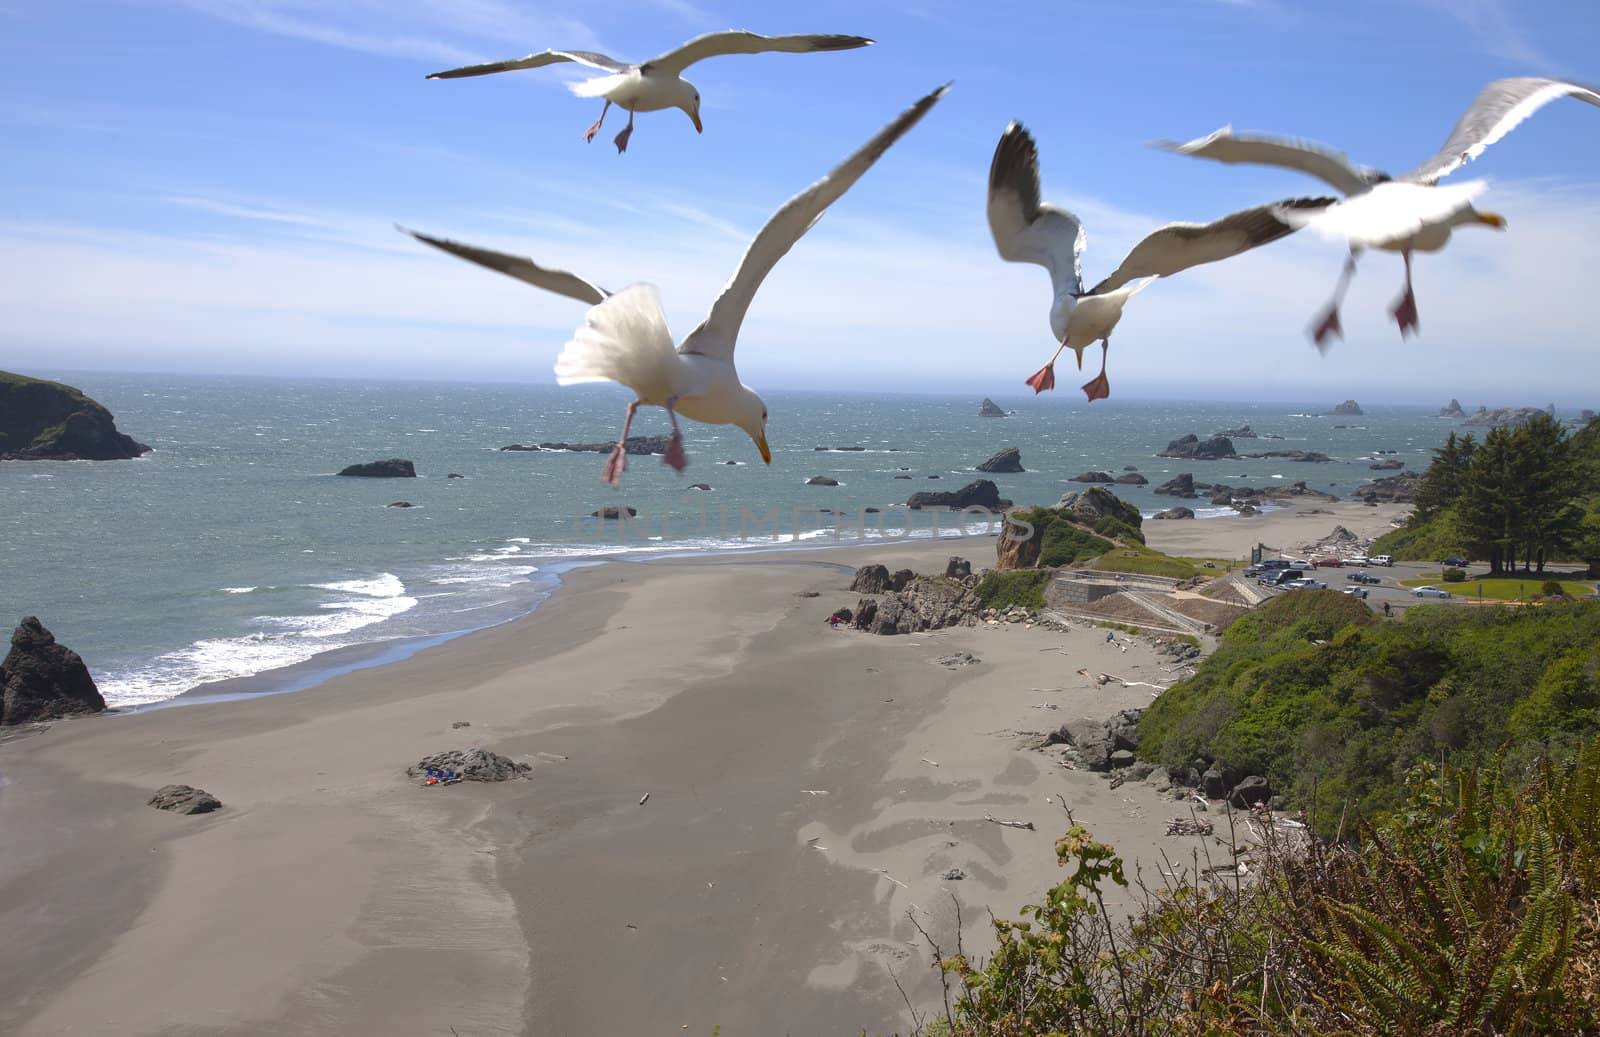 Oregon coastline rocky beaches and seagulls near Yachats OR.